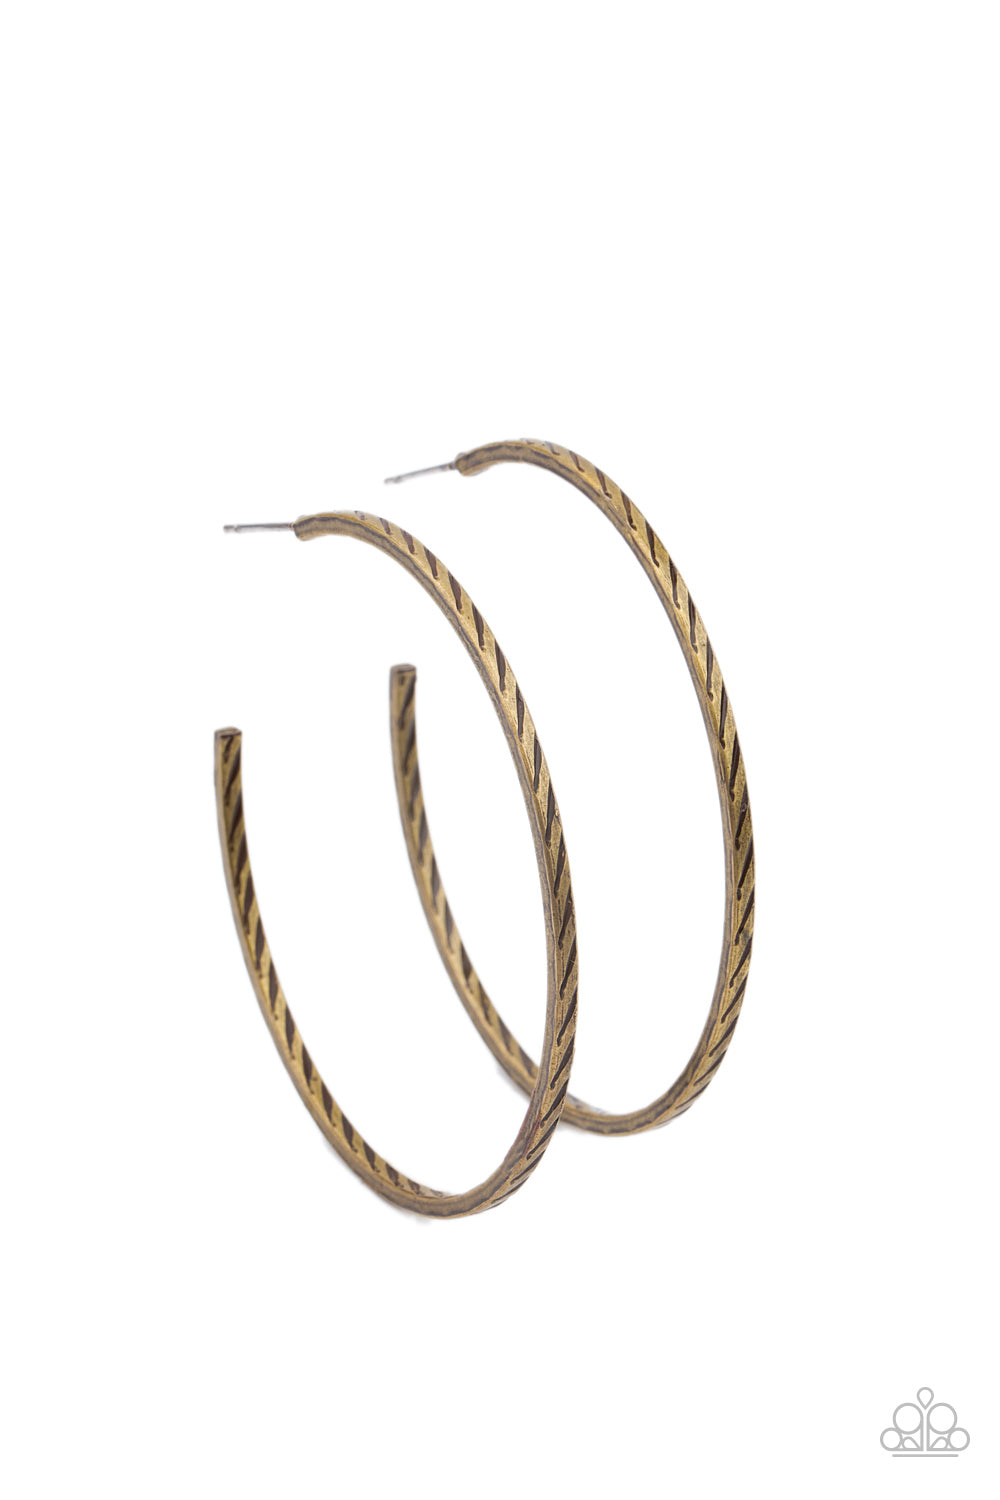 Rural Reserve Earrings - Brass